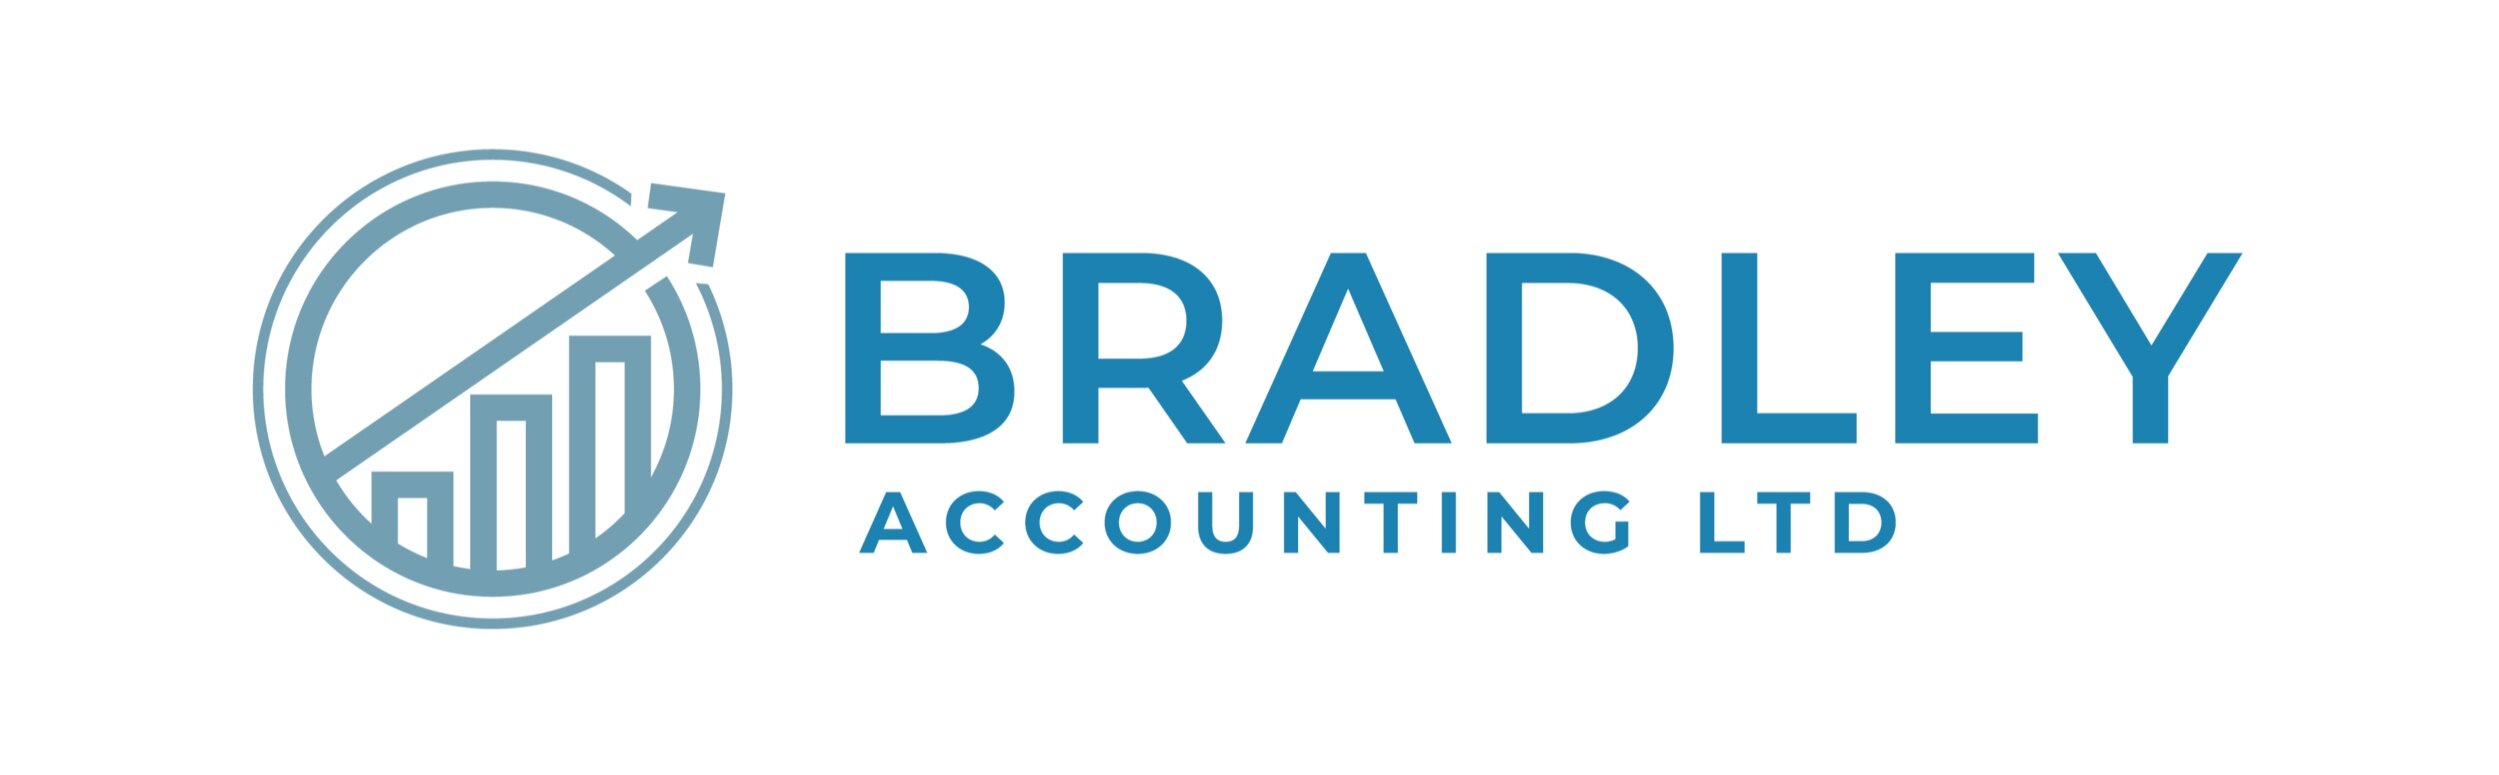 Bradley Accounting